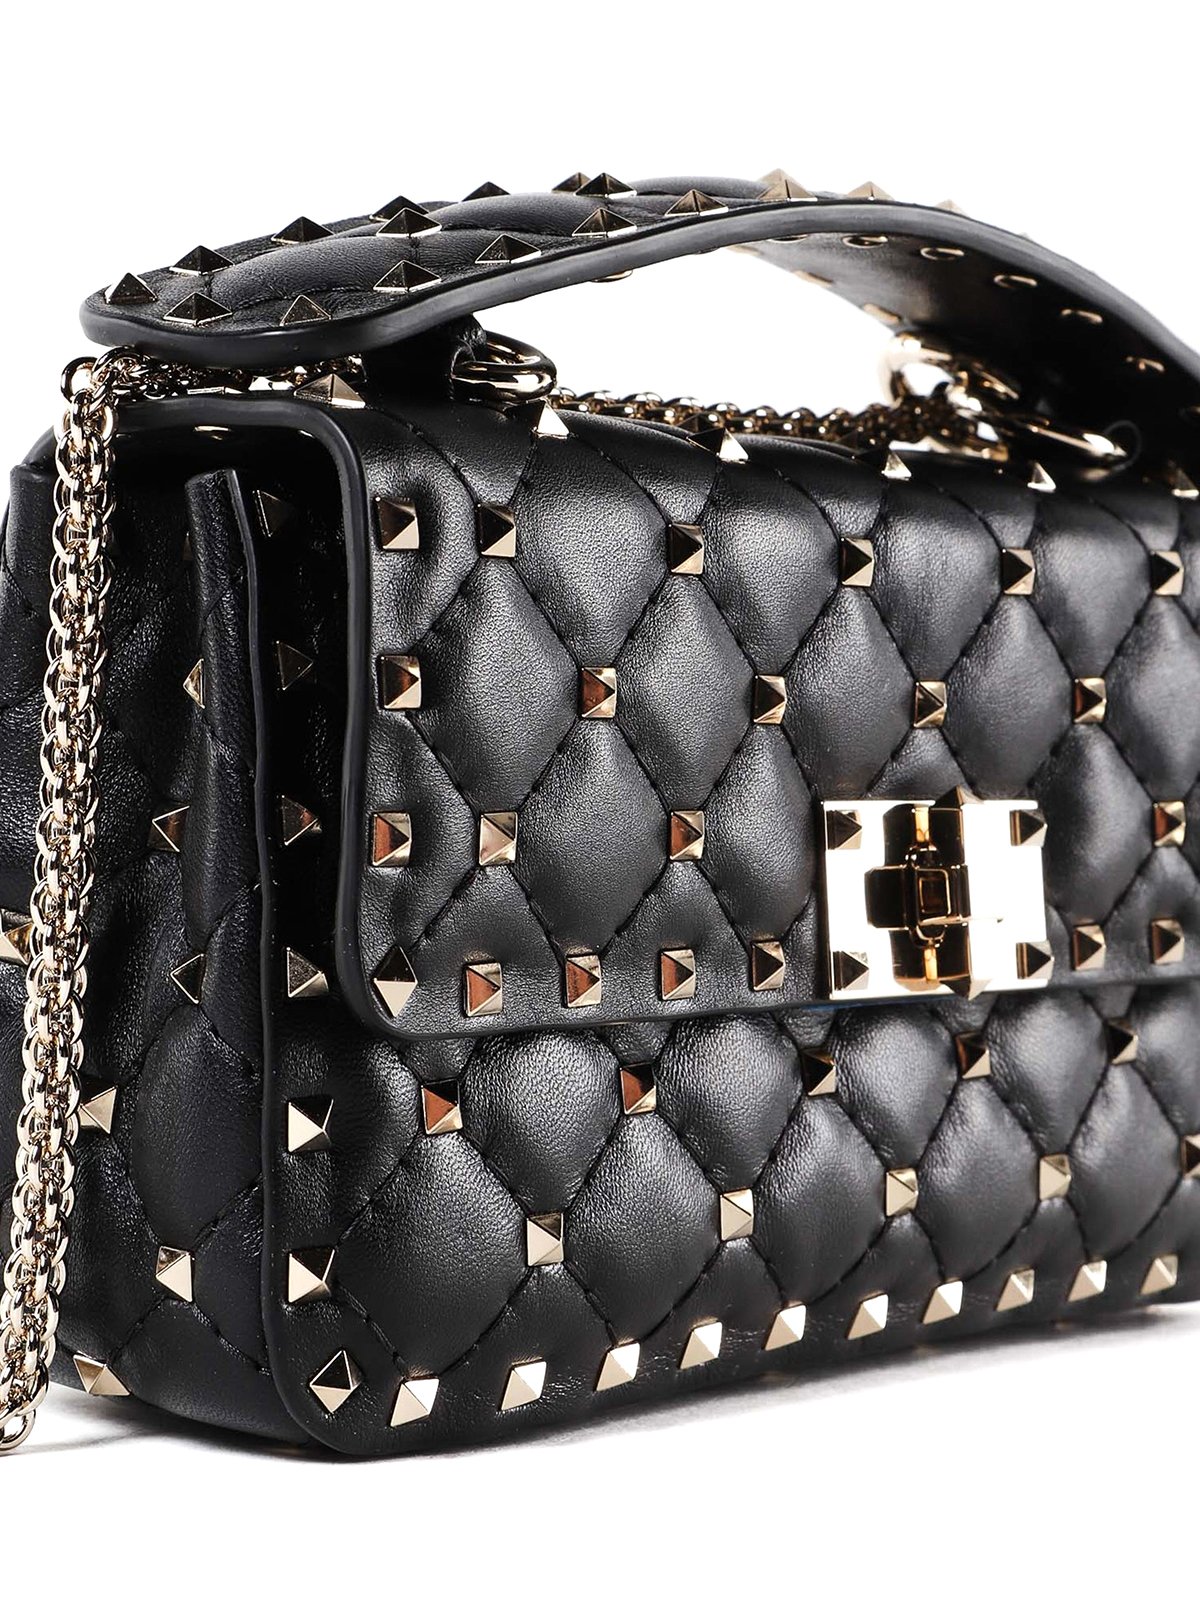 Black Rockstud leather cross-body bag, Valentino Garavani